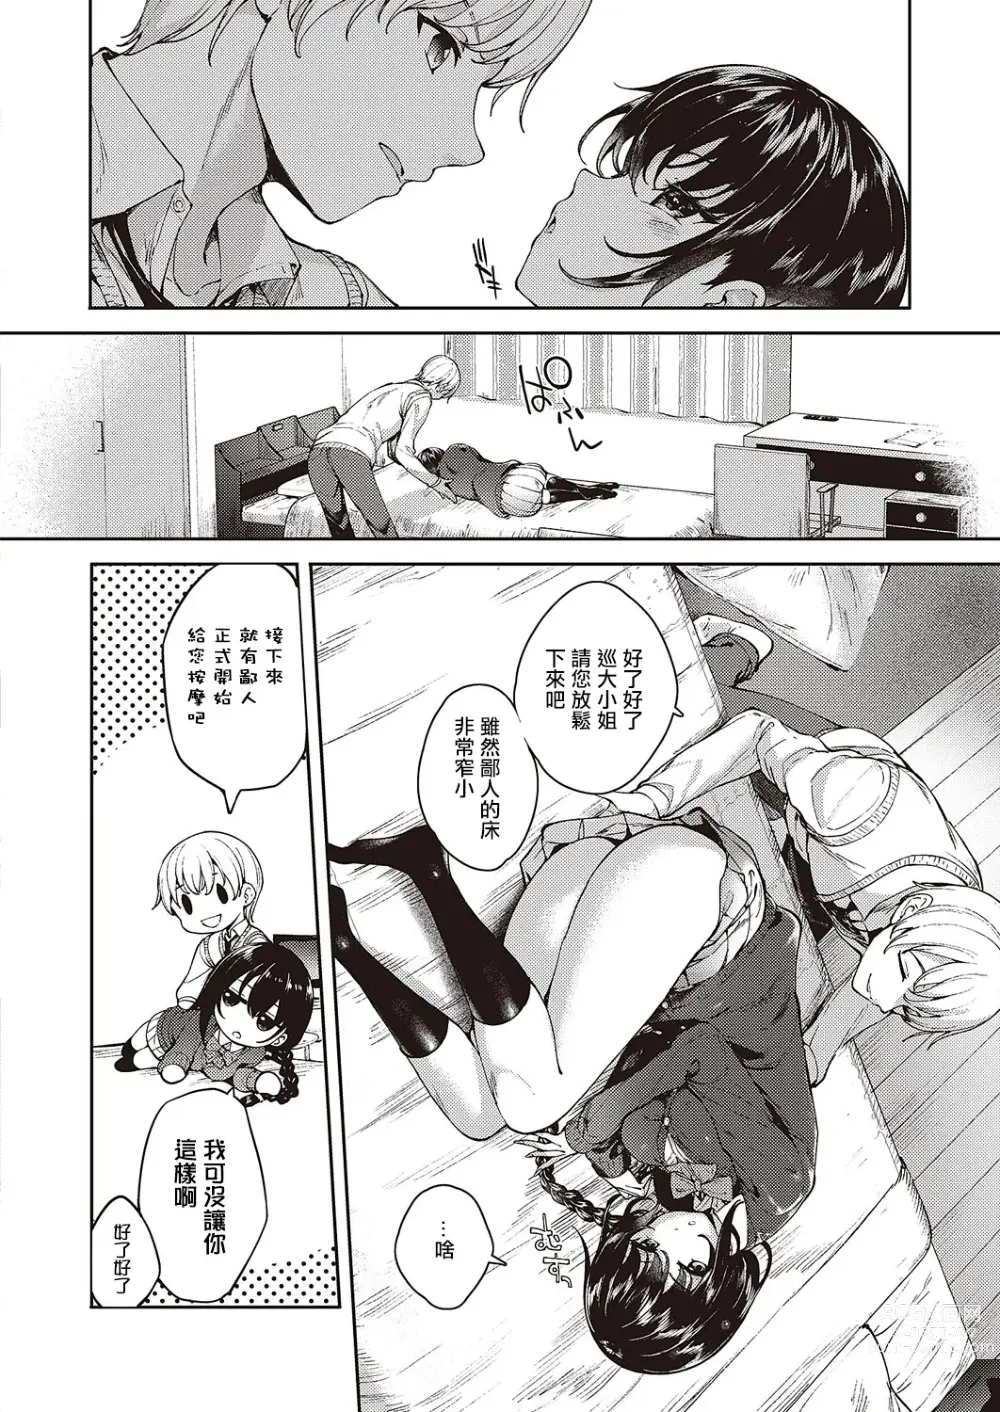 Page 12 of manga めぐりどころ 1歩